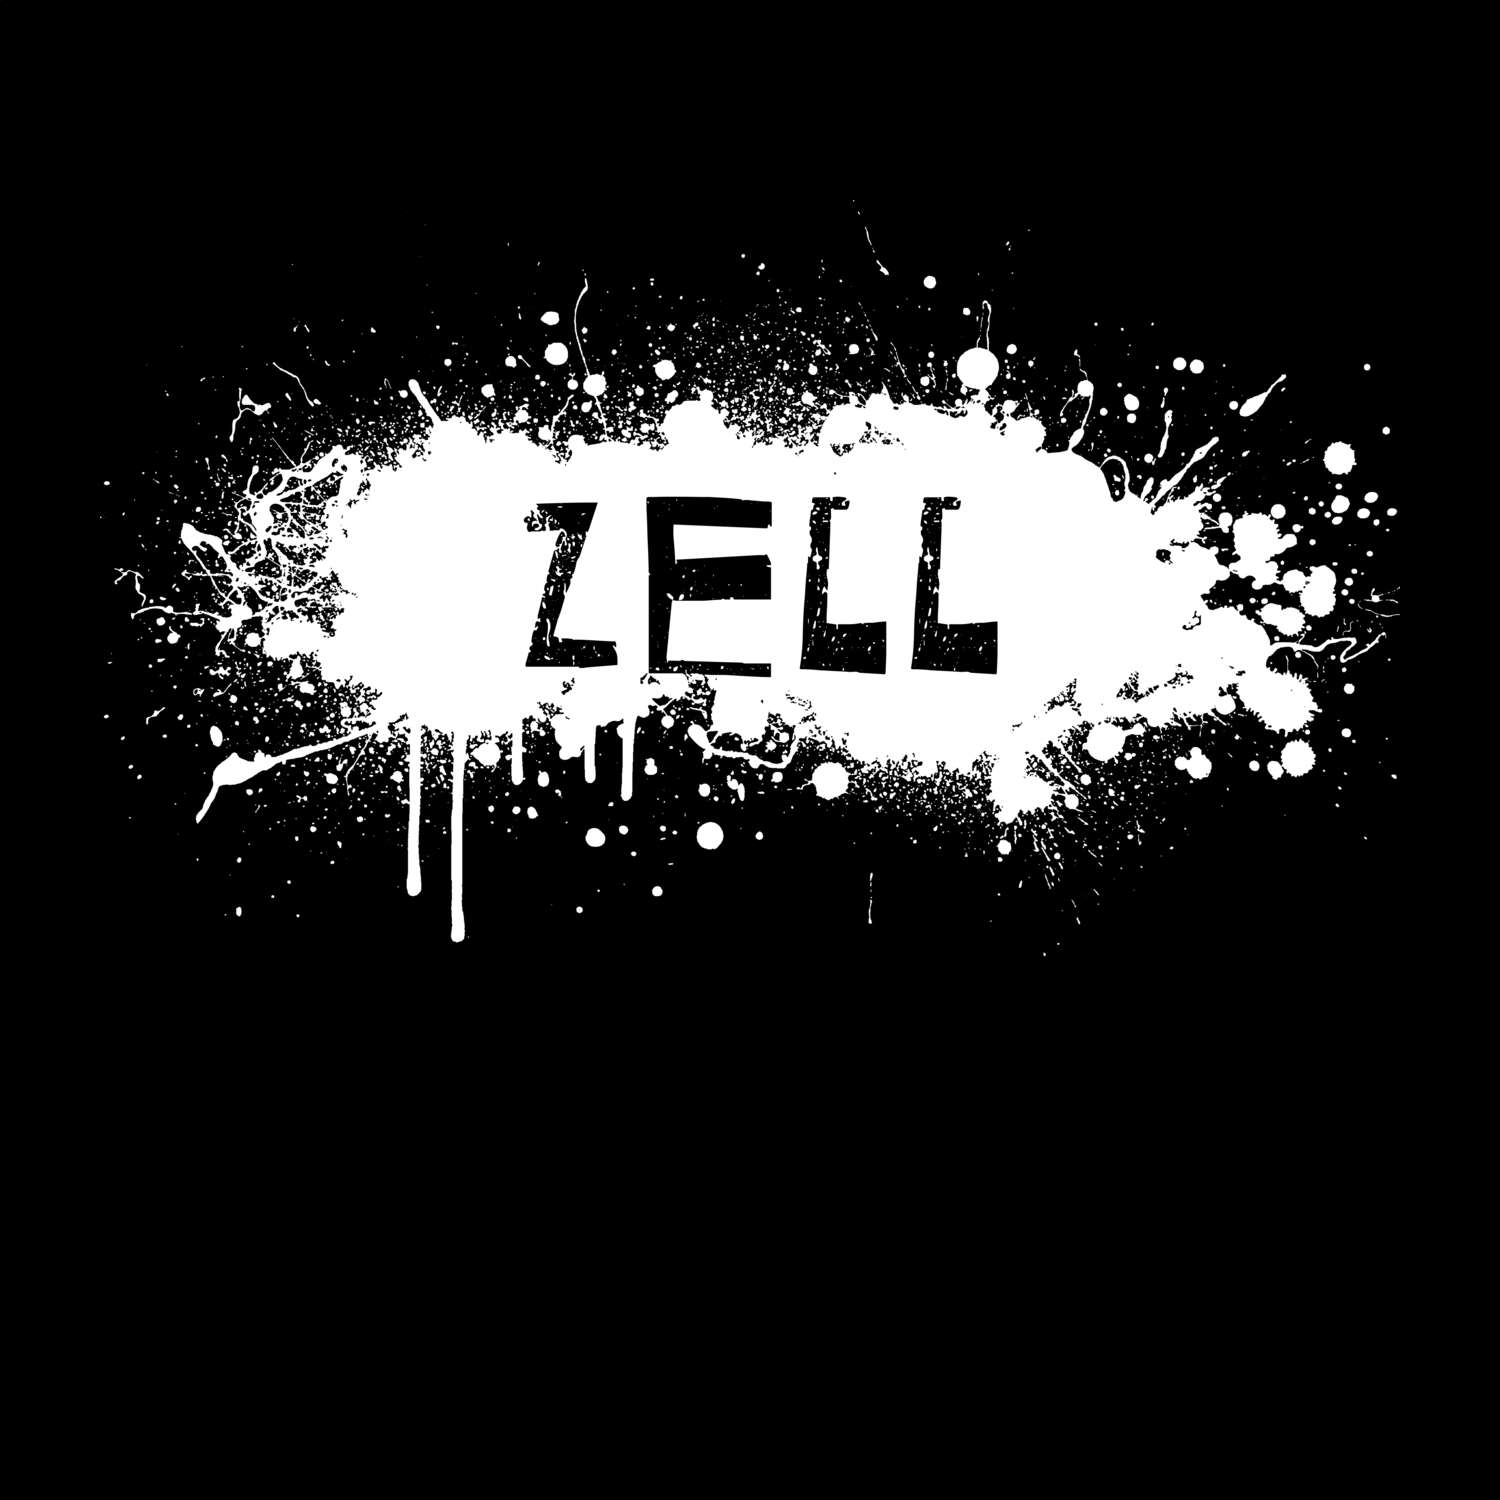 Zell T-Shirt »Paint Splash Punk«